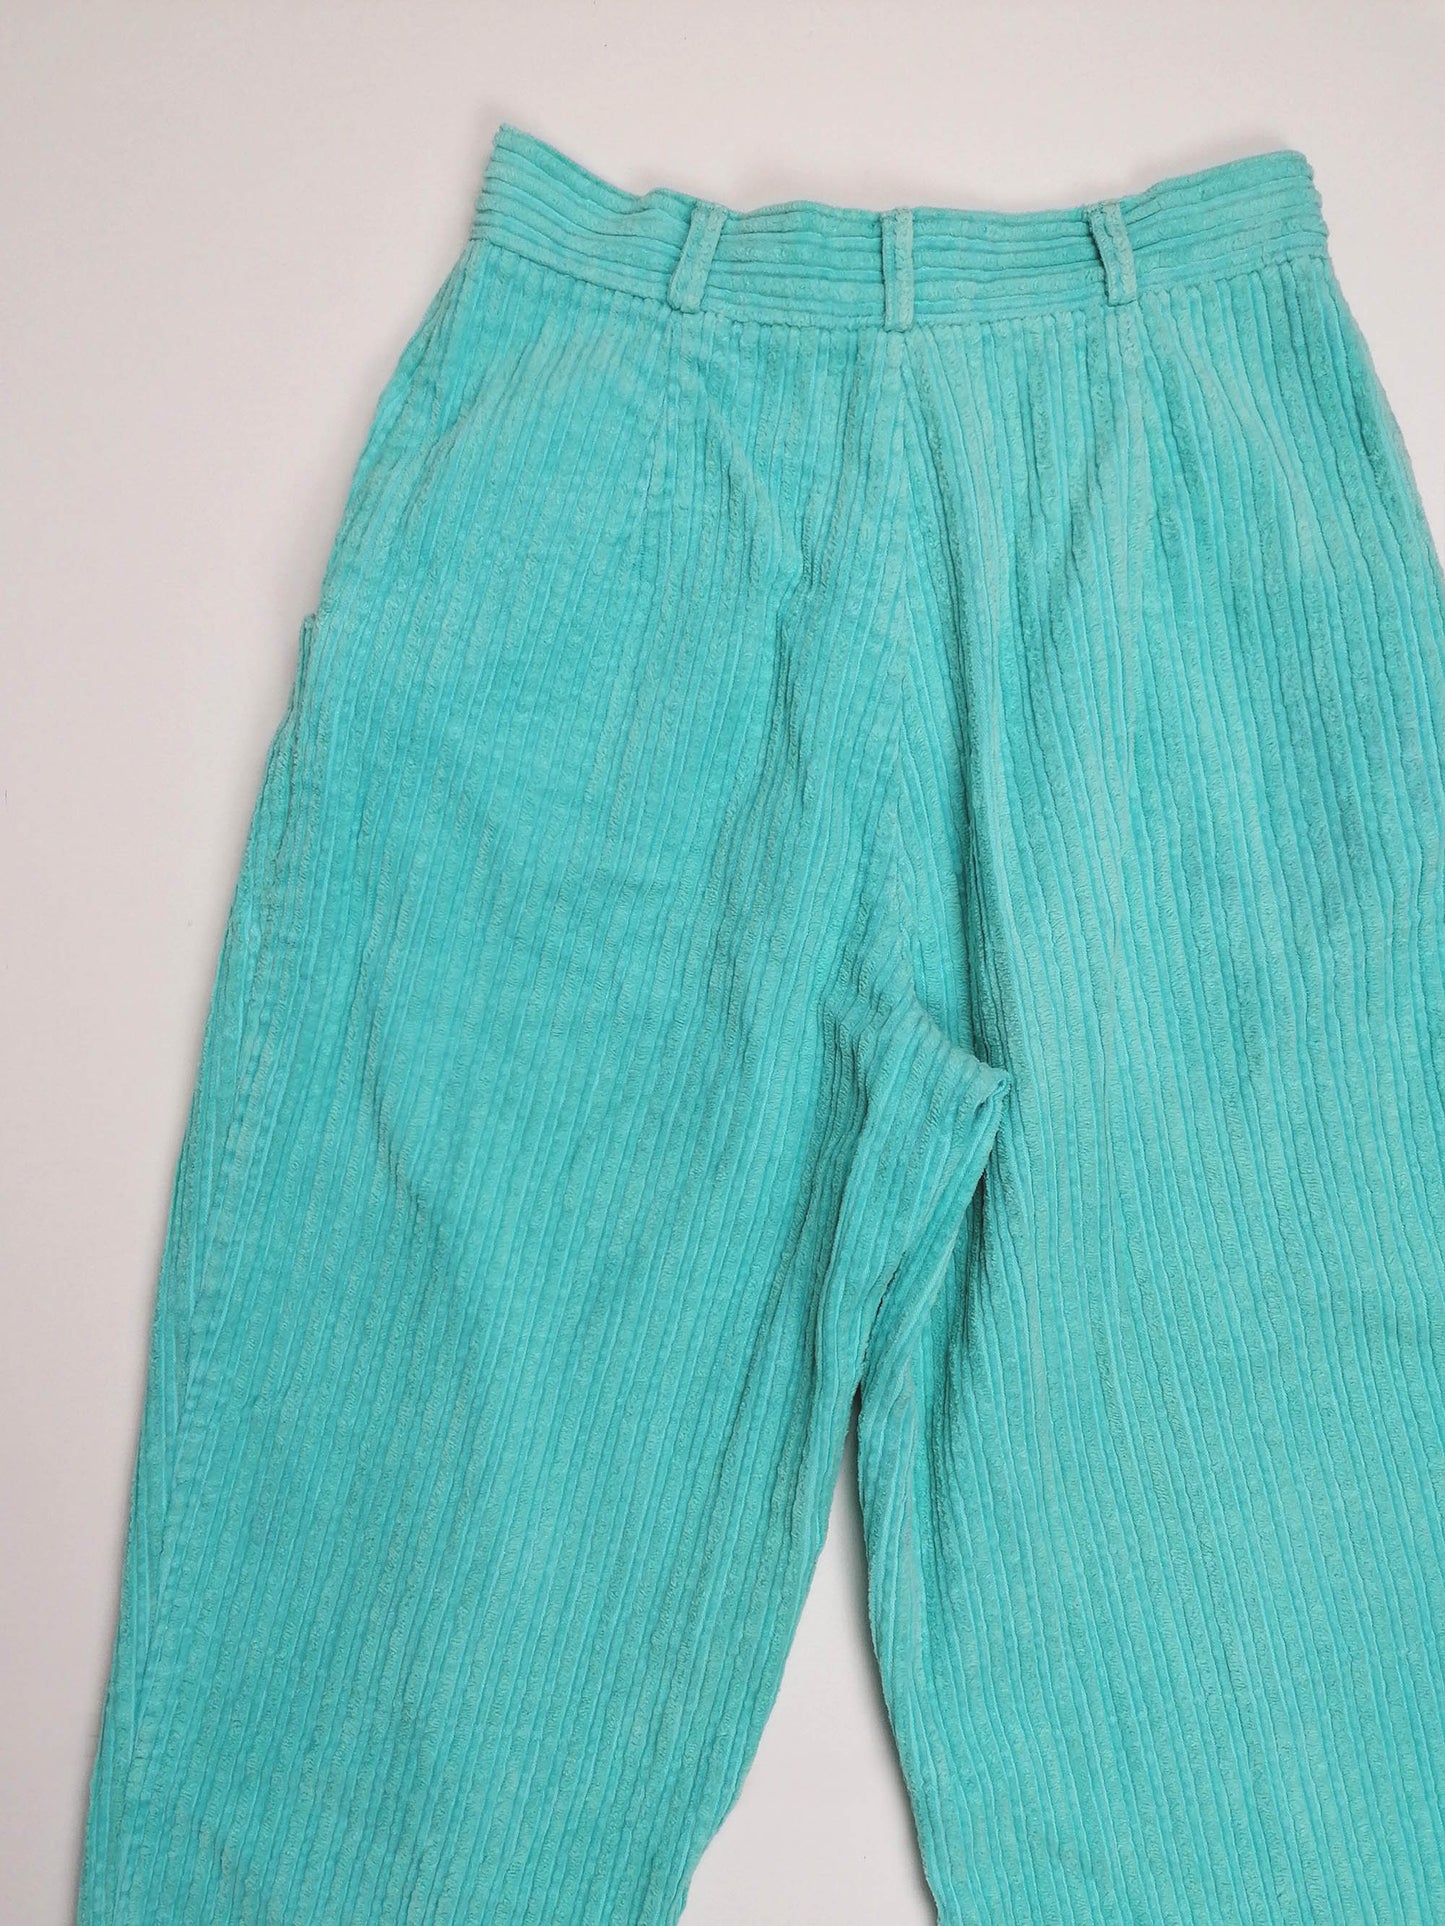 Vintage 80's High Waist Corduroy Velvet Baggy Jeans Aqua Turquoise - size XS-S (25")